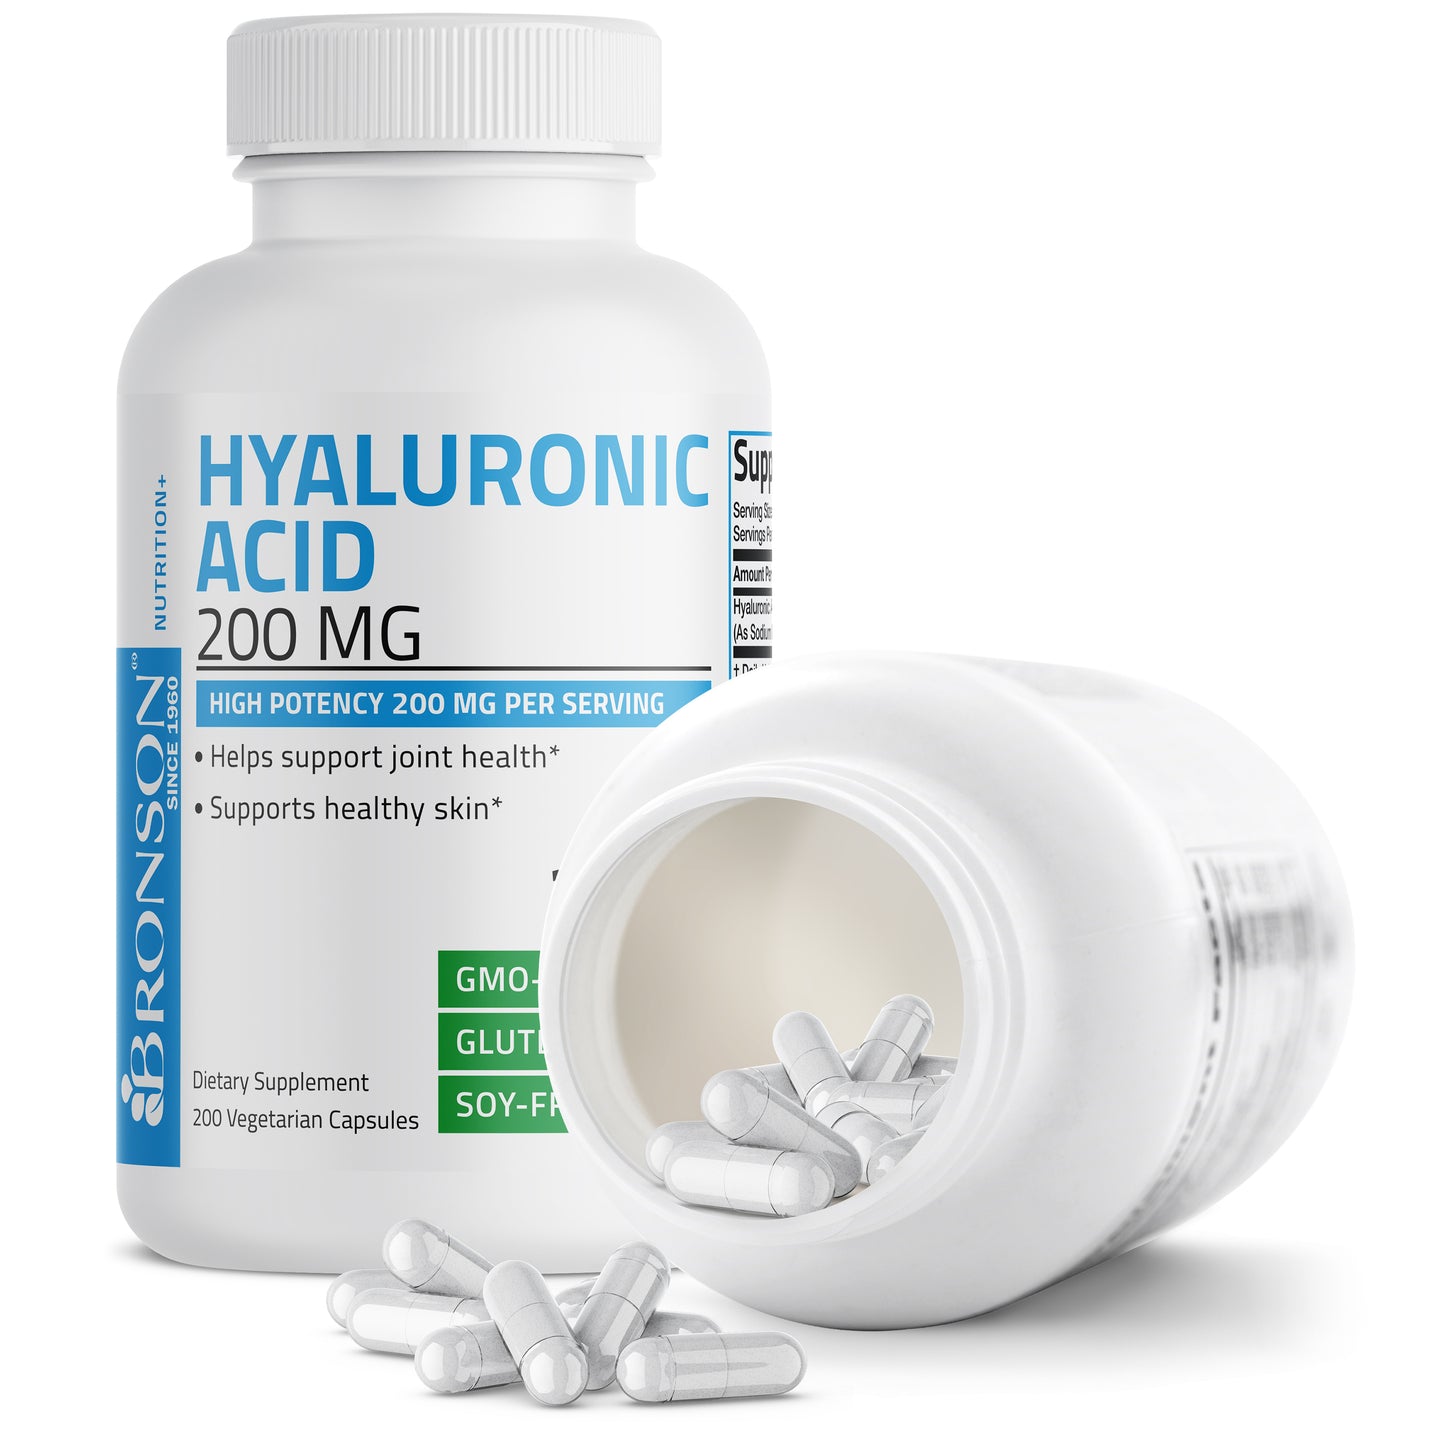 Hyaluronic Acid 200 MG, 200 Vegetarian Capsules